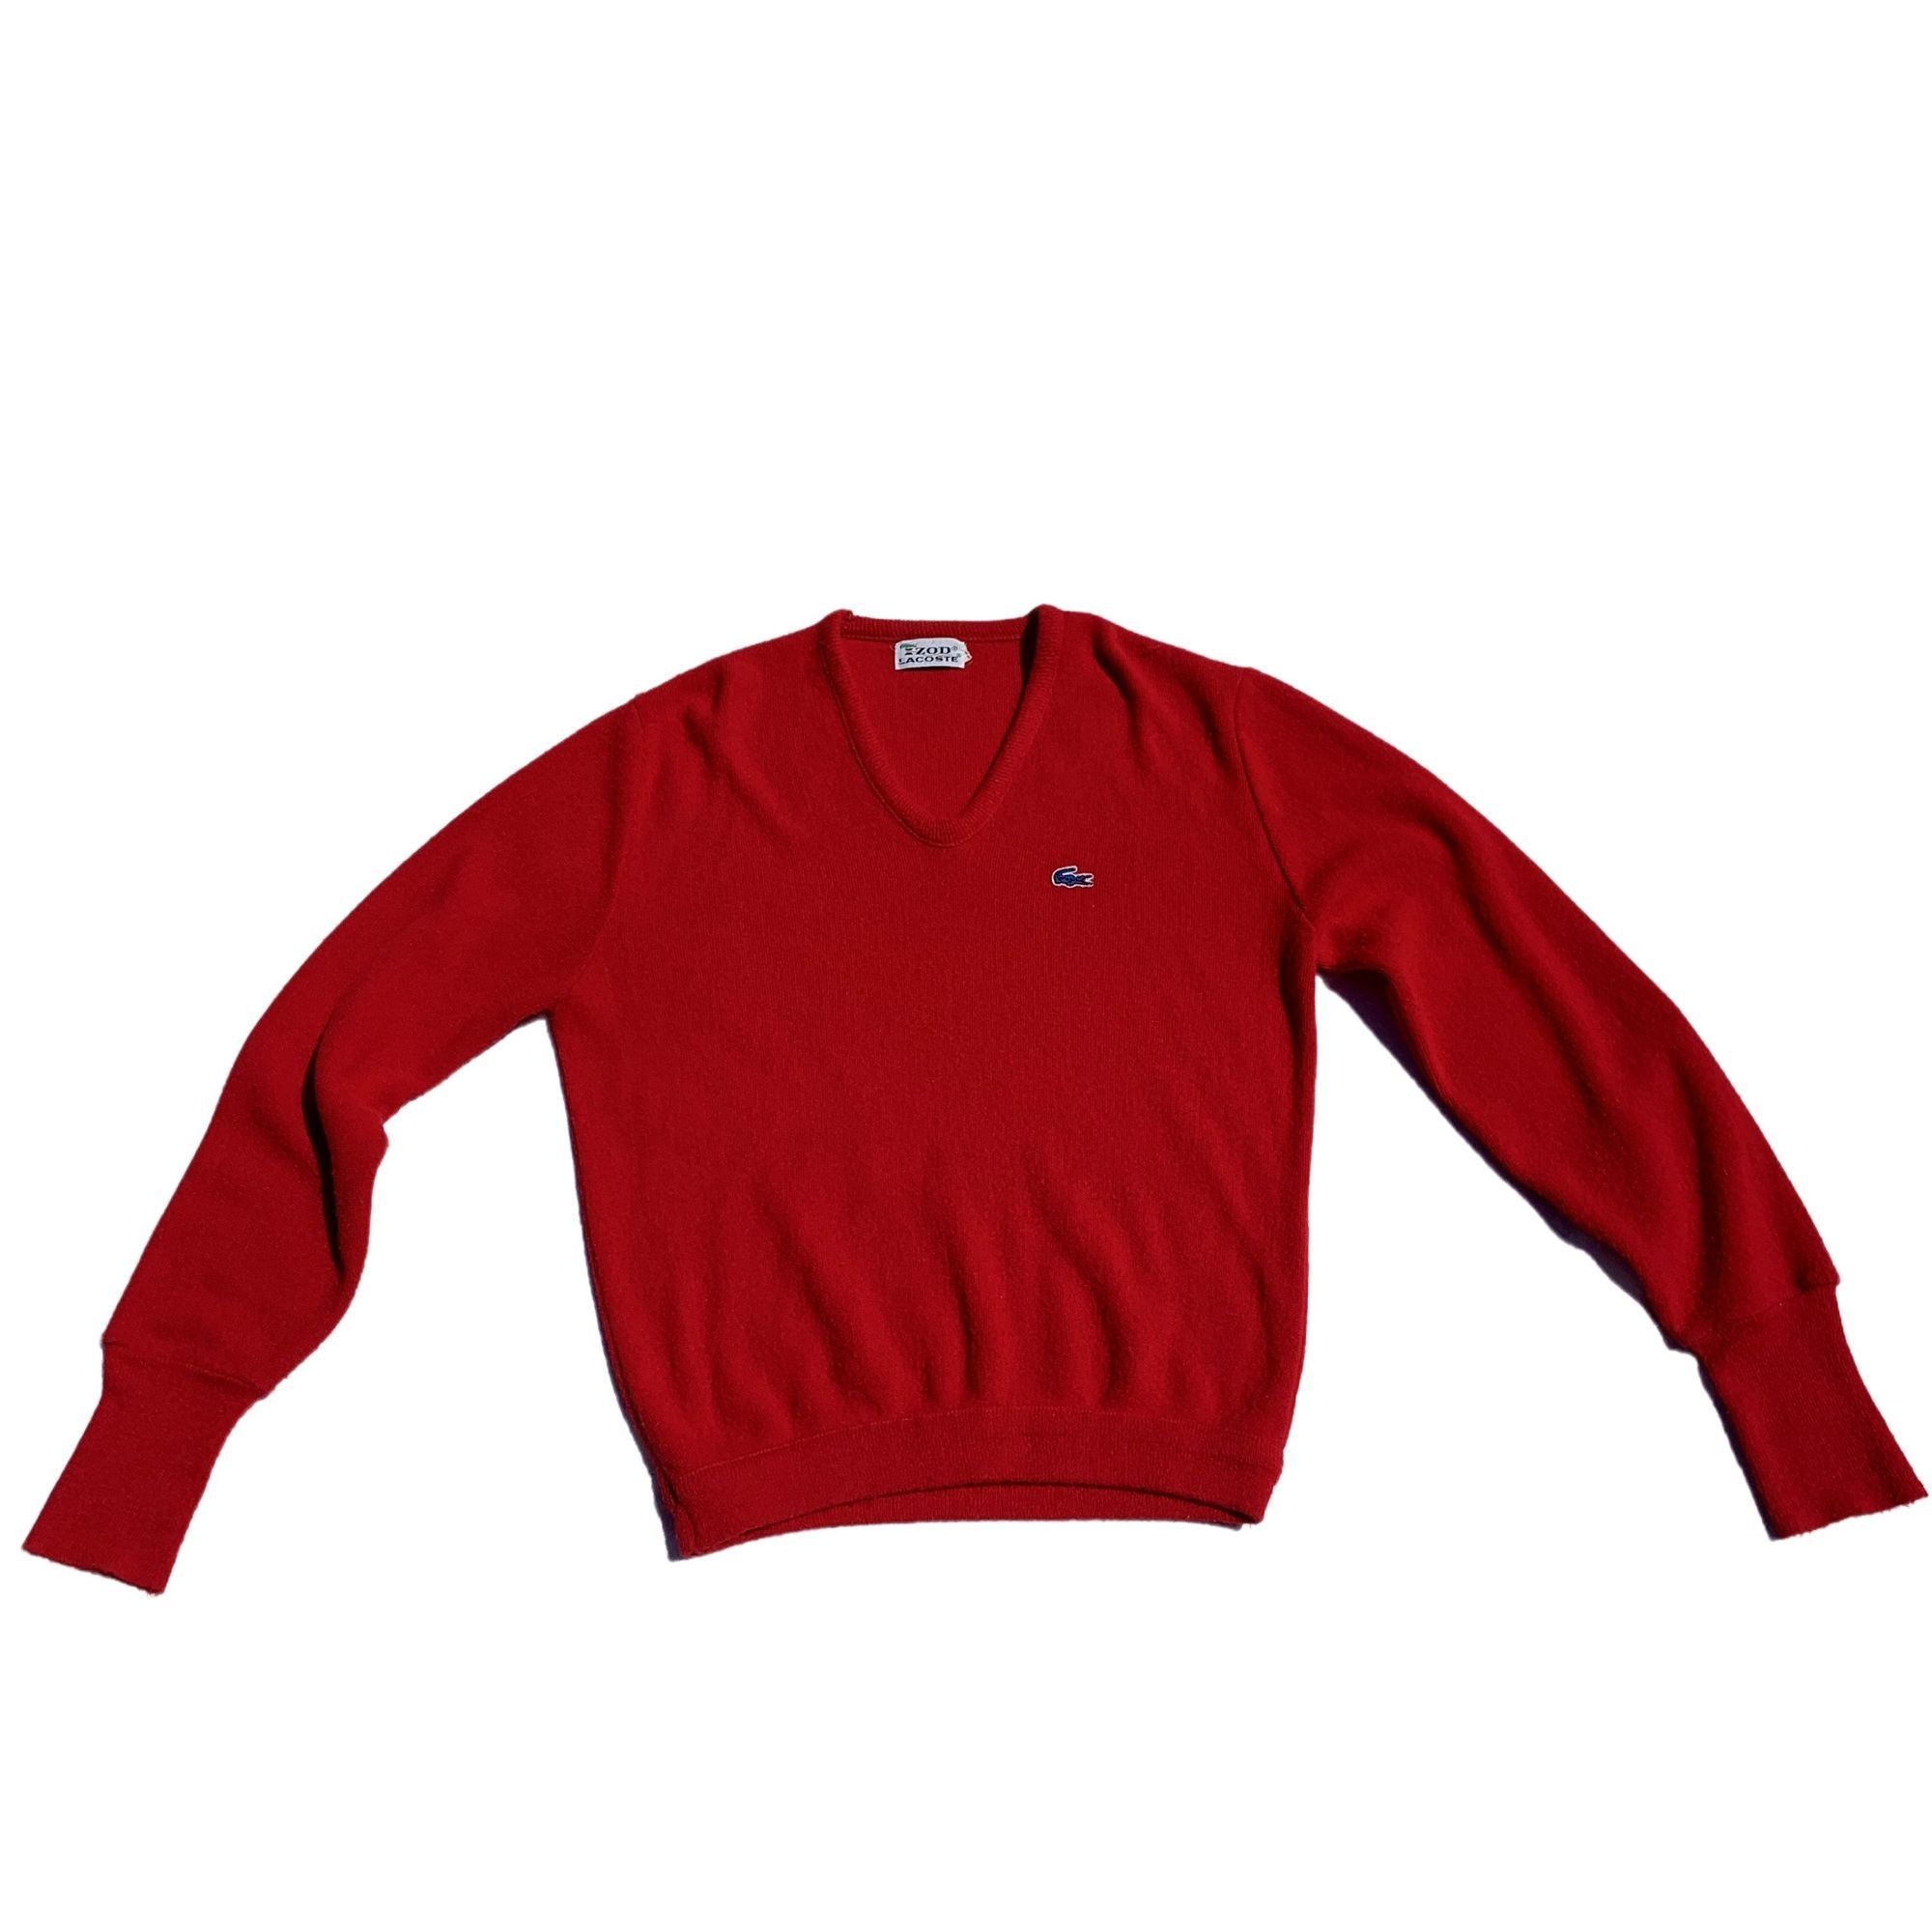 Vintage Lacoste Vintage 1970s Men's Red Pullover Sweater Large Size US L / EU 52-54 / 3 - 3 Thumbnail